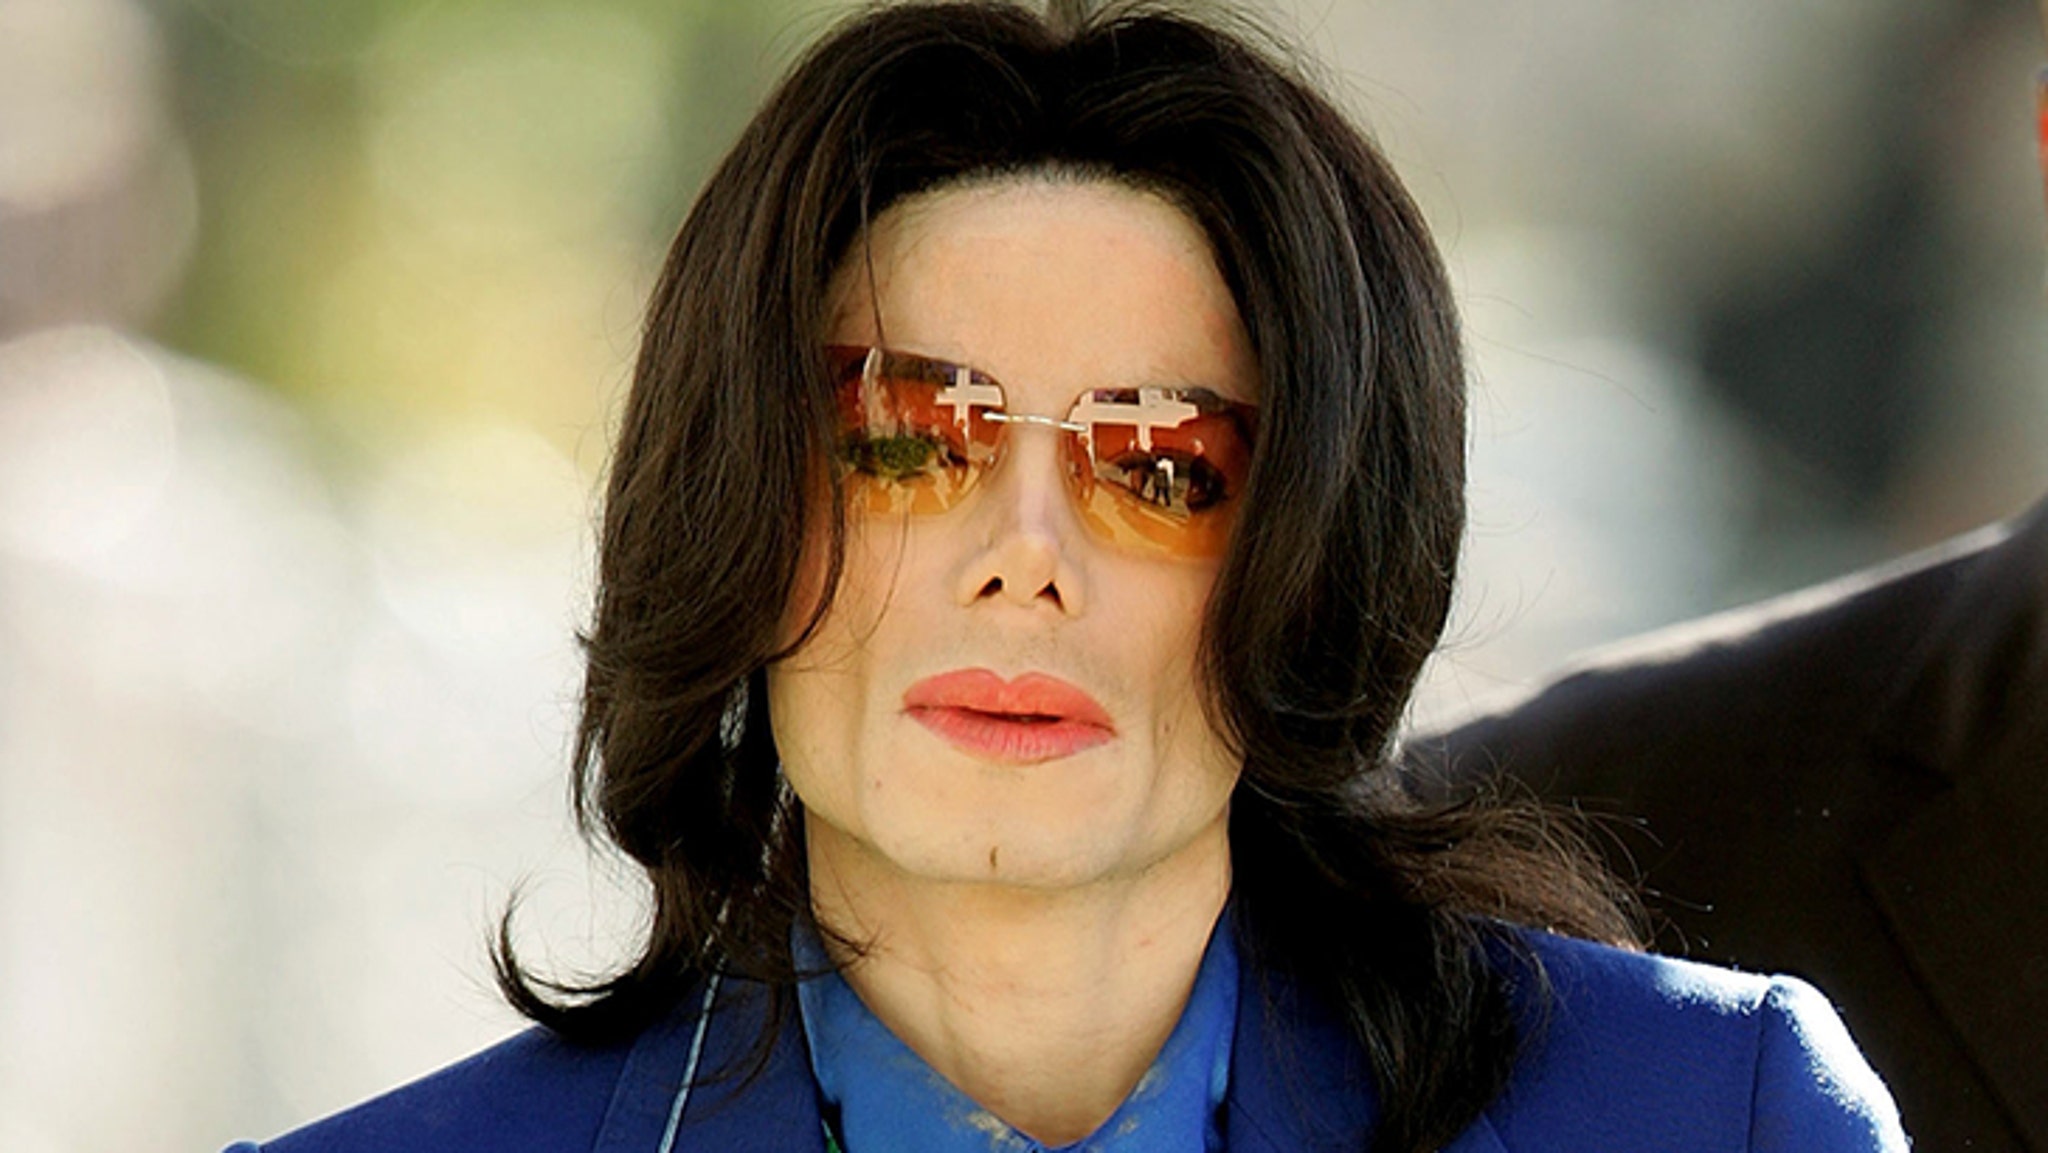 Reality Star Albert Ochoa Cops Michael Jackson 'Thriller' Boxing